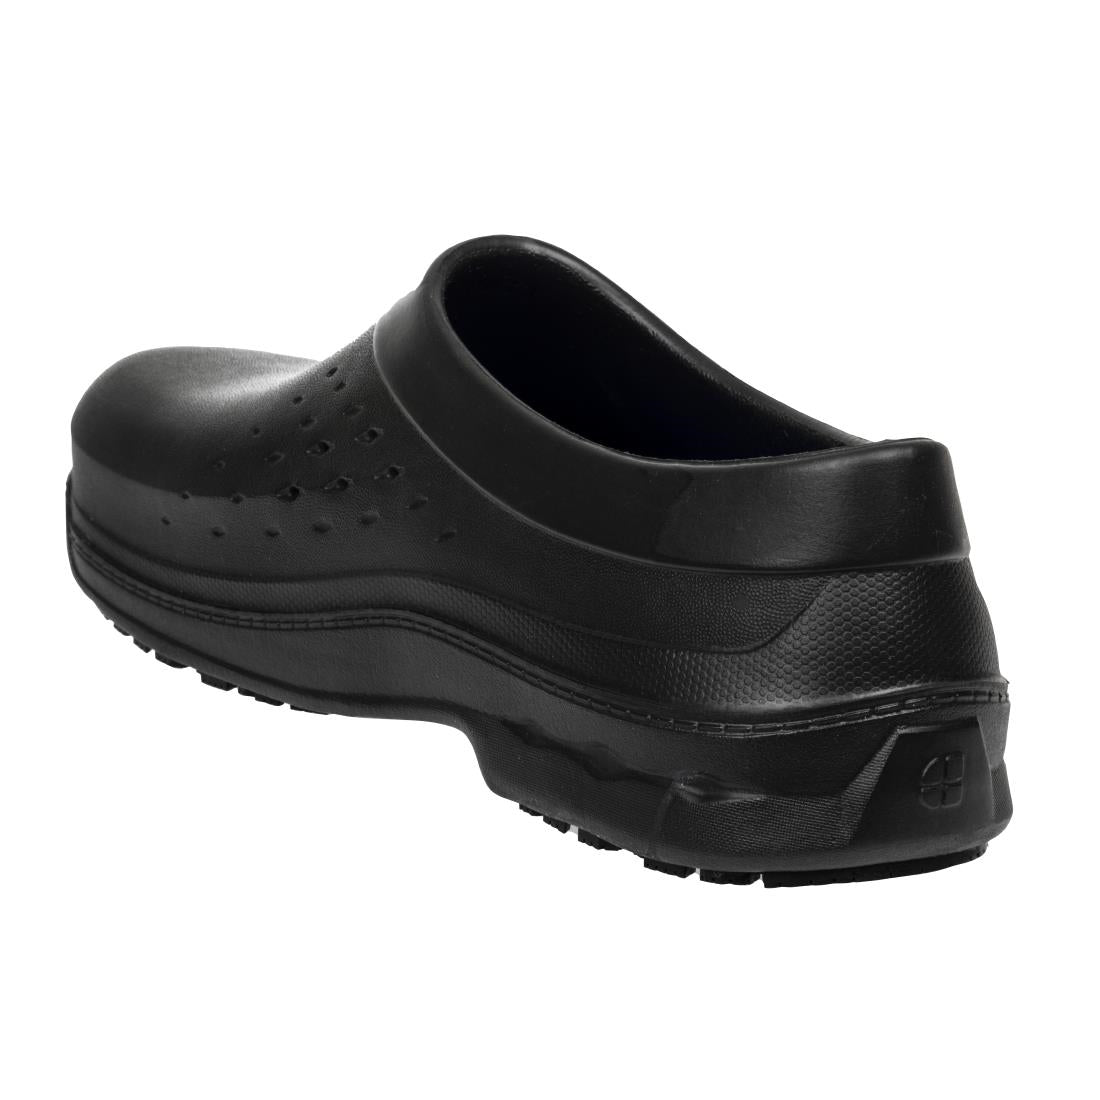 BB581-37 Shoes for Crews Radium Clogs Black